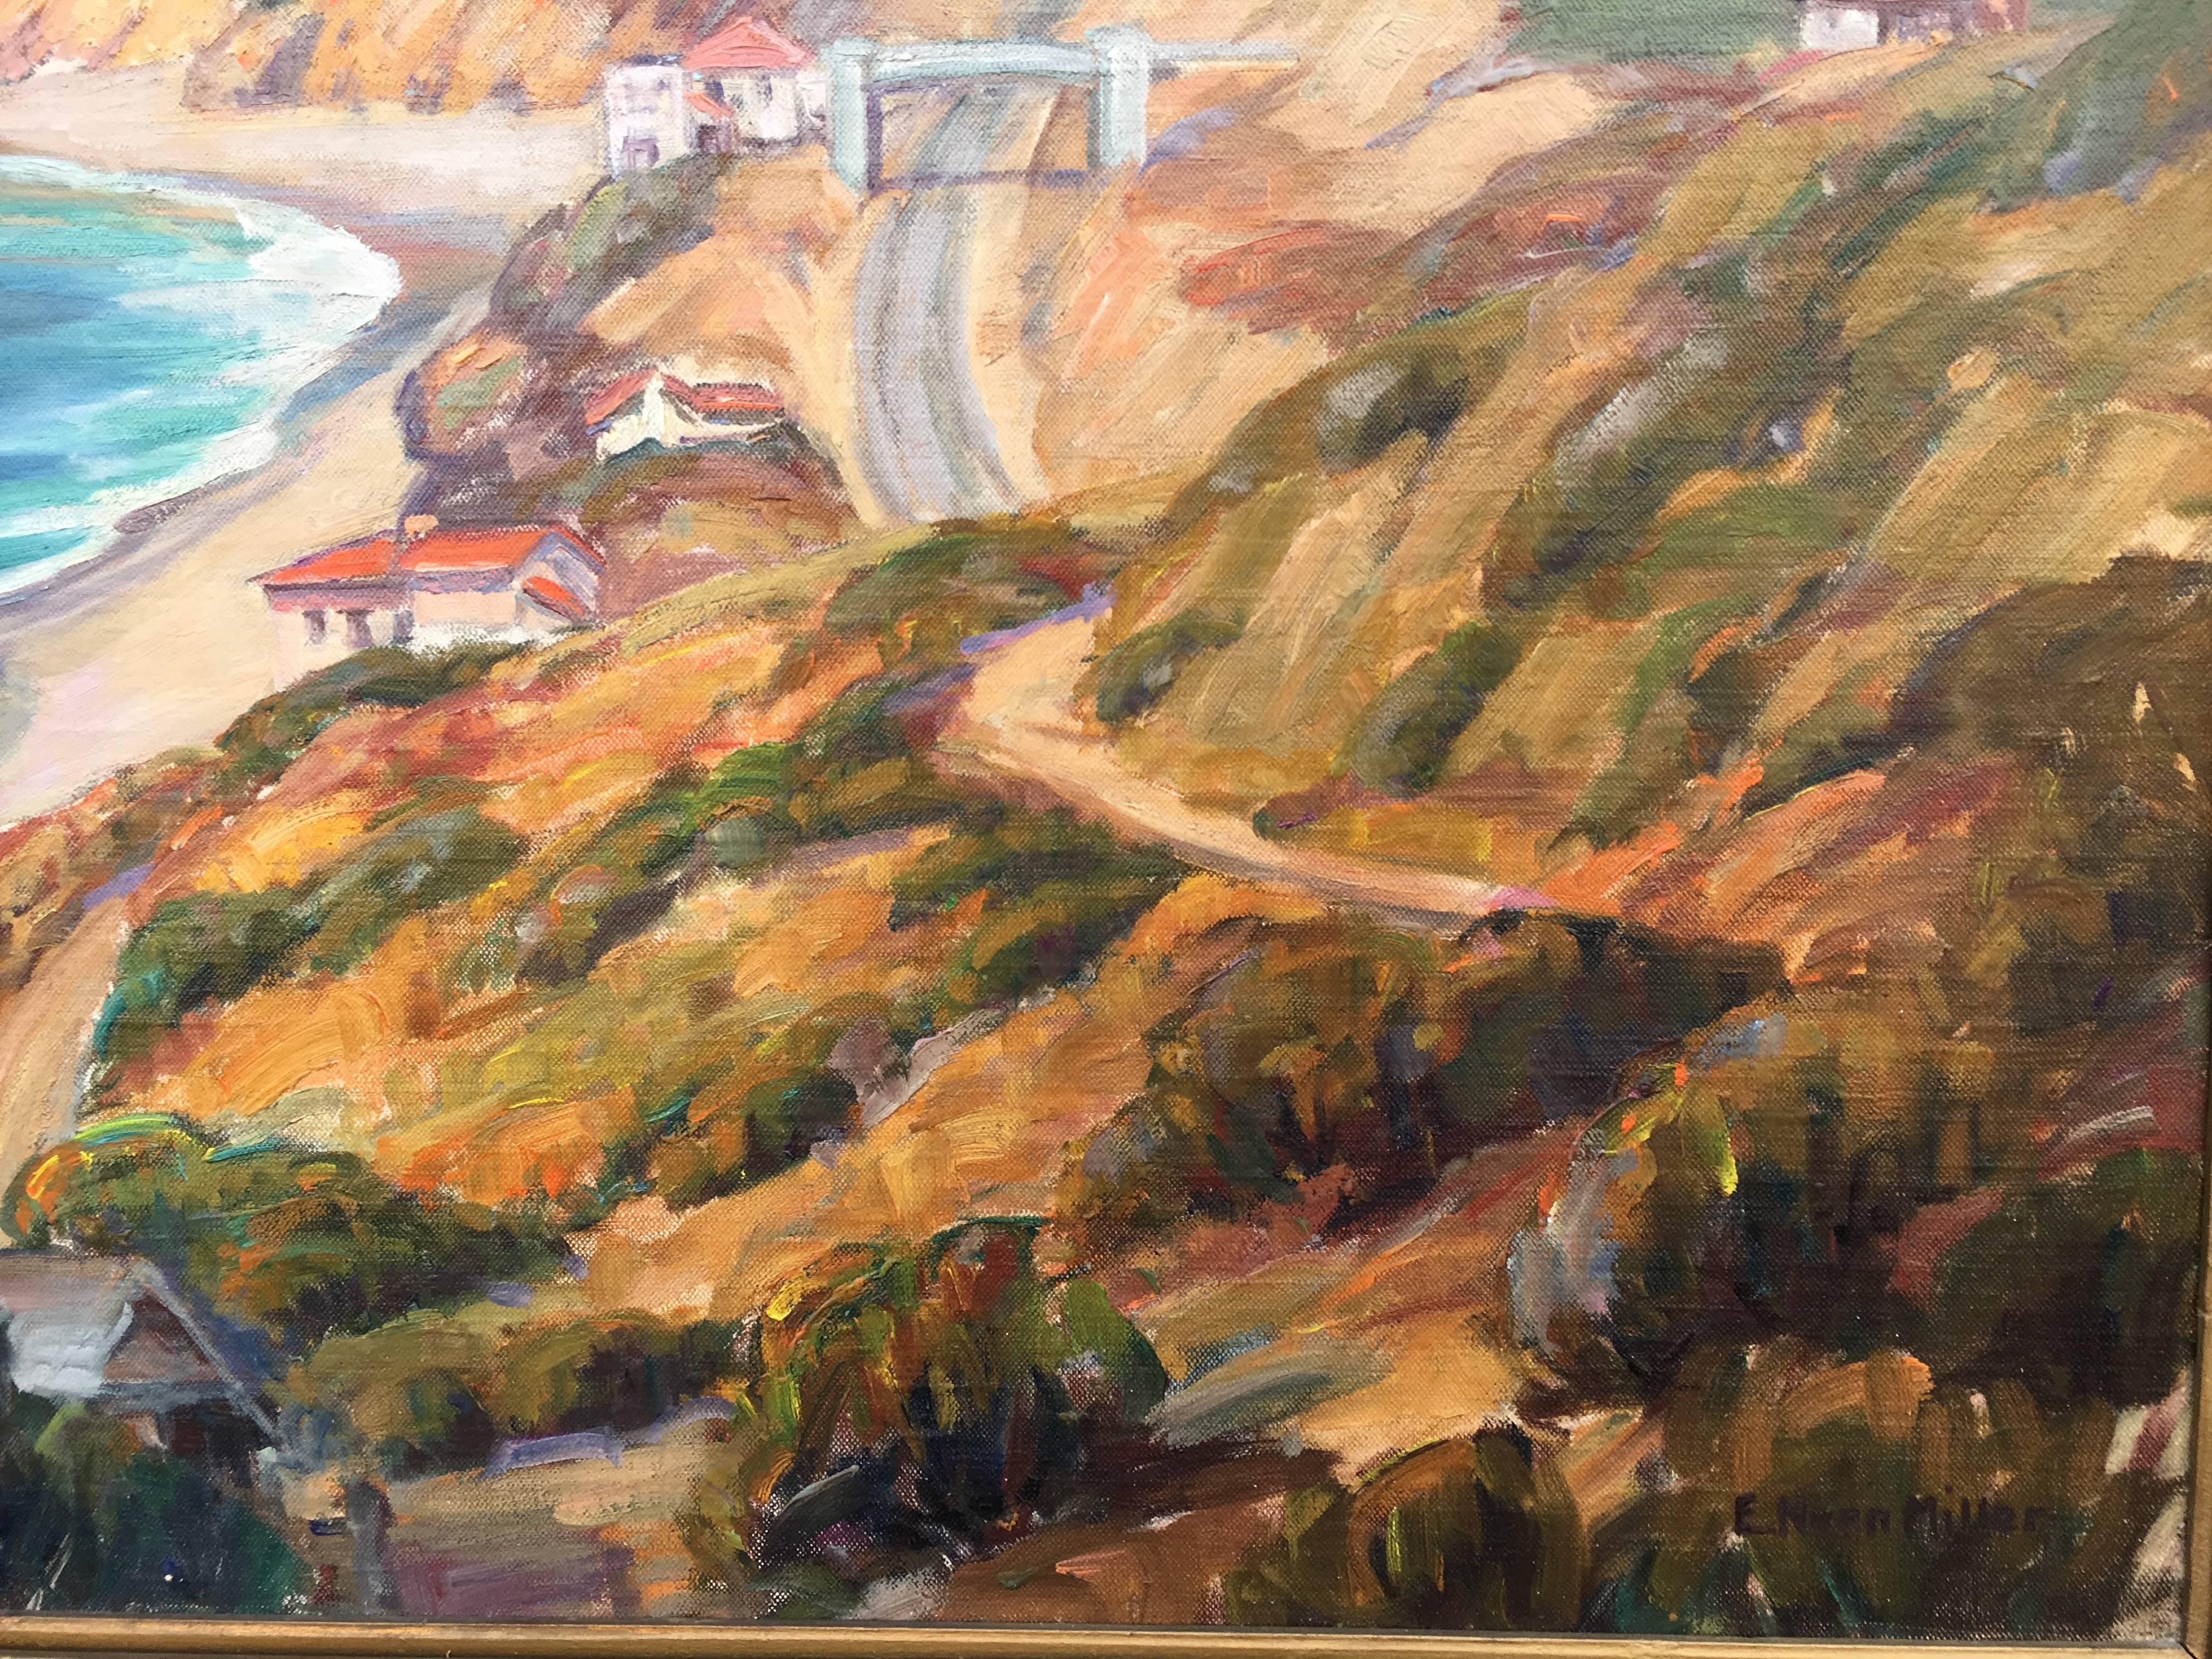 California Coastline - American Impressionist Painting by Evylyna Nunn Miller